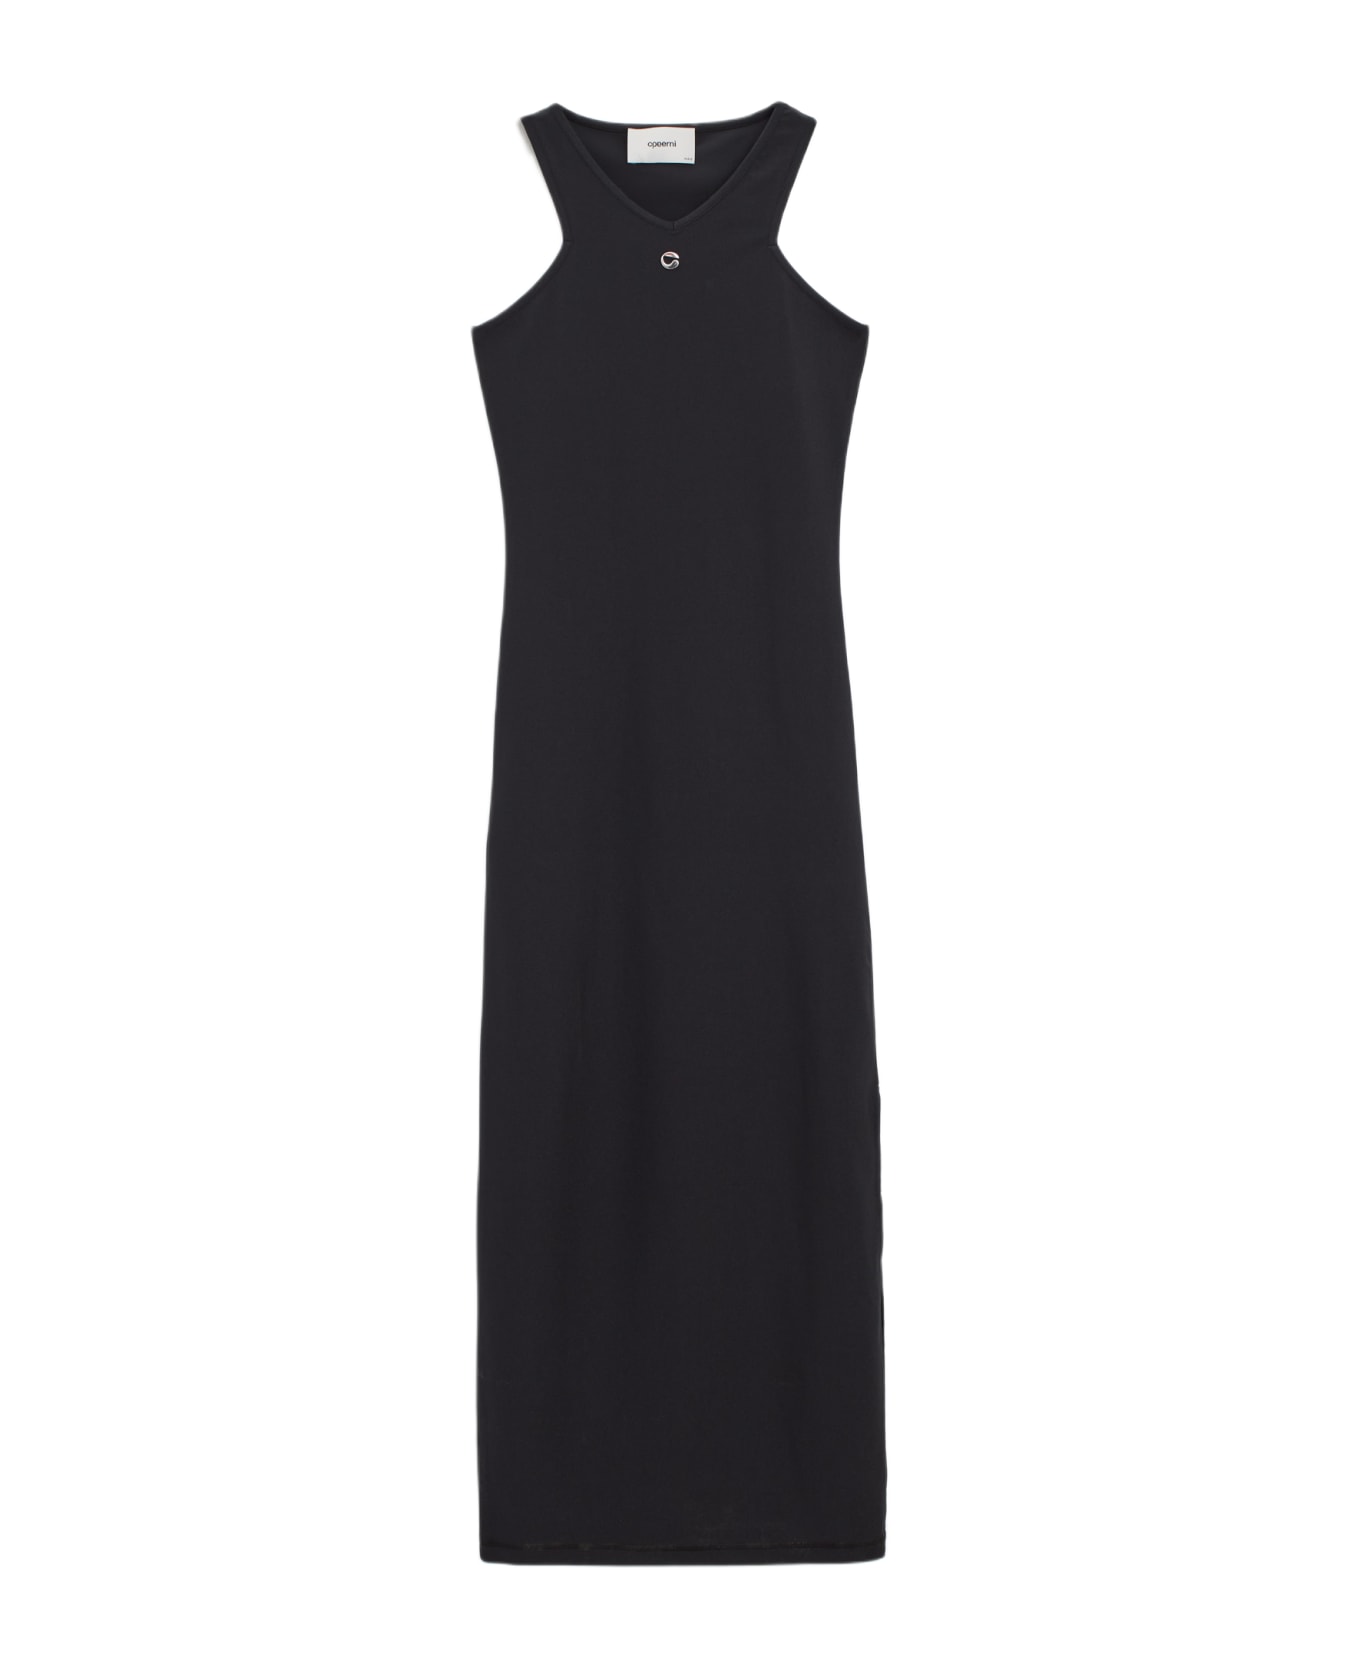 Coperni Knitted Tank Top Dress - black